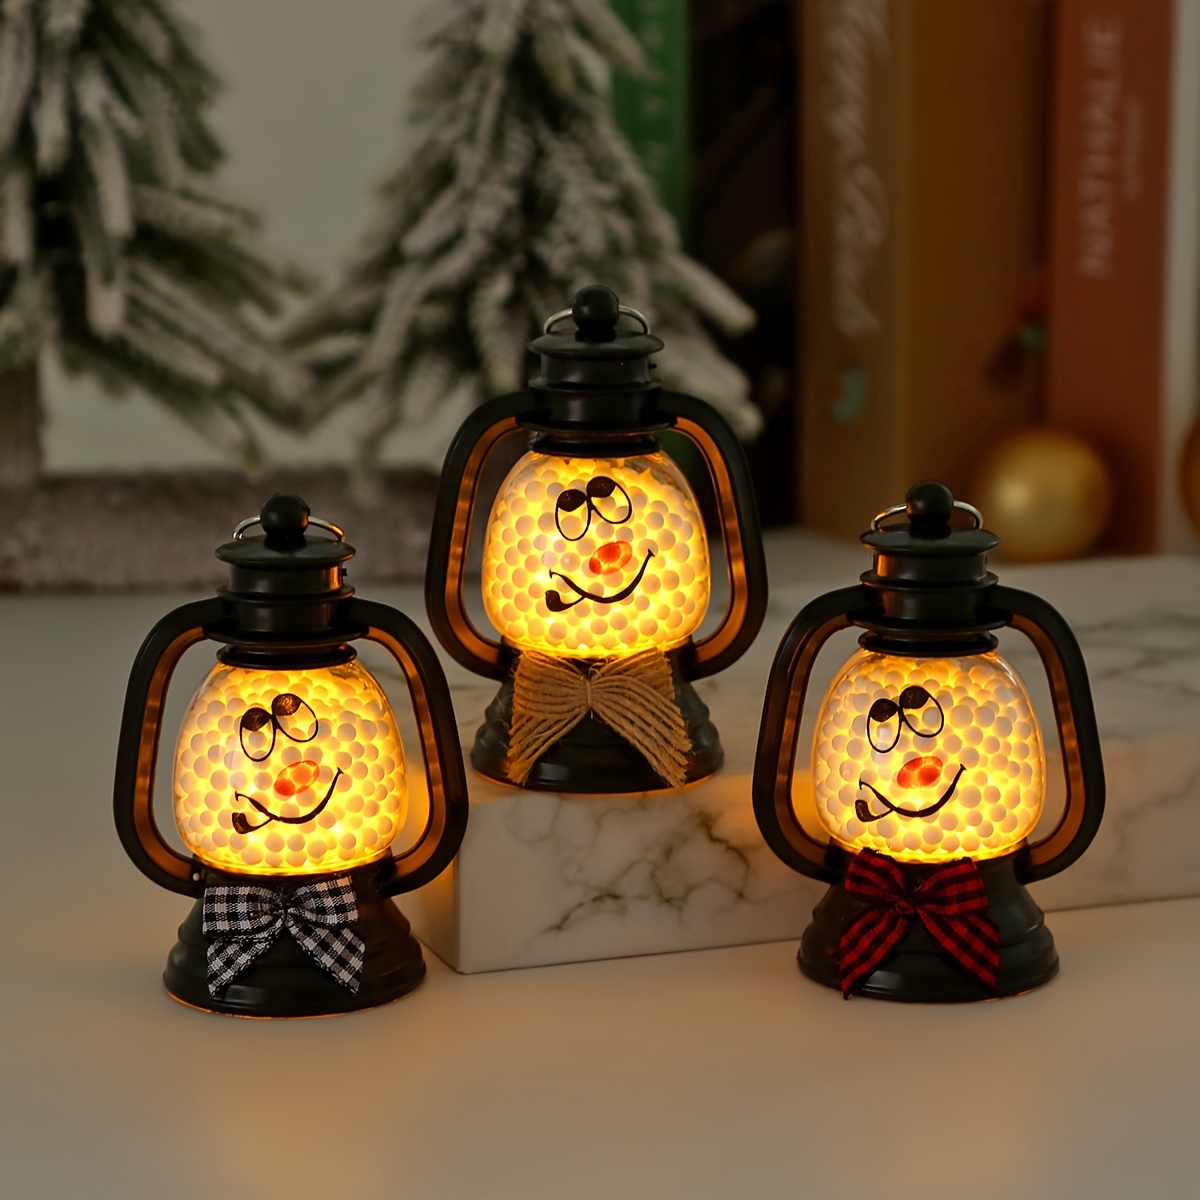 Mini Lanterns Decorative for Centerpiece: Romadedi 10pcs Hanging Small Gold  Lantern Bulk with Flickering LED Candles for Wedding Decor, Halloween